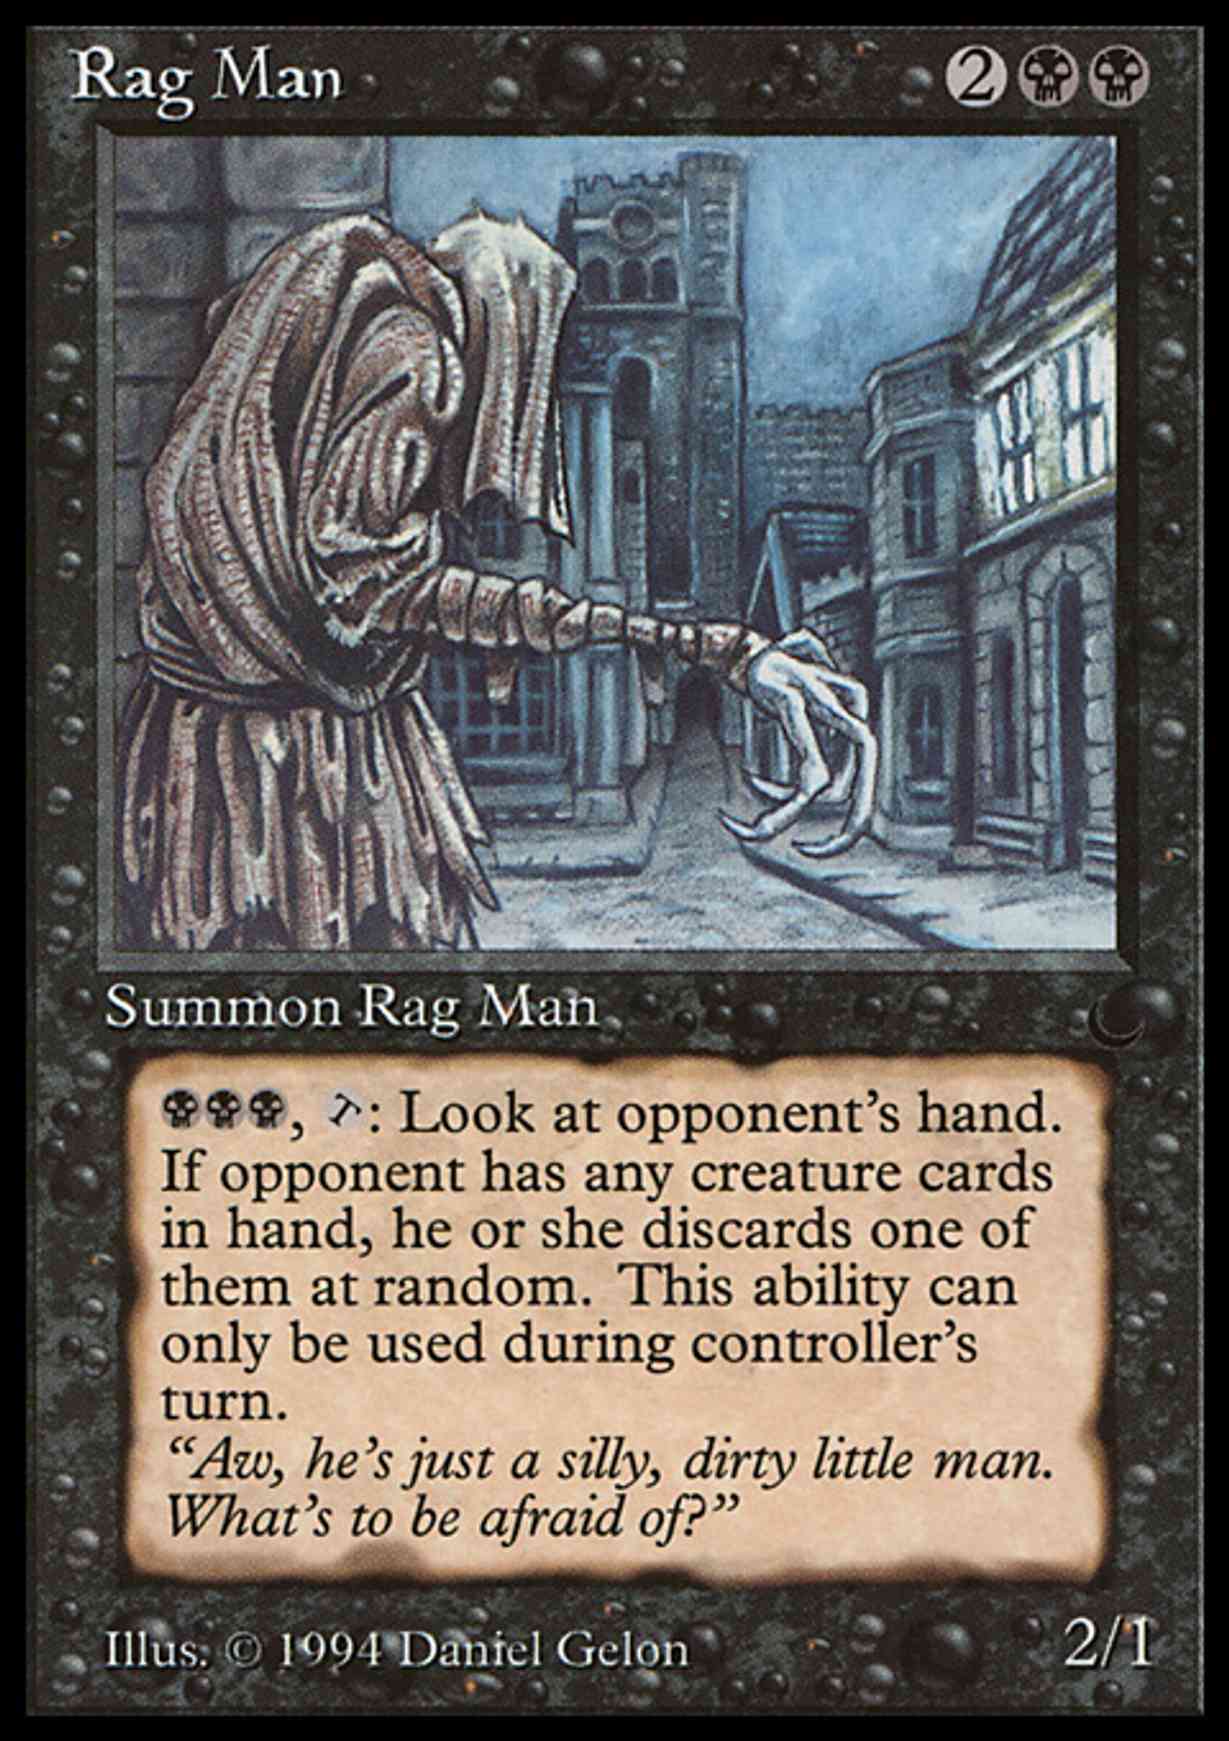 Rag Man magic card front